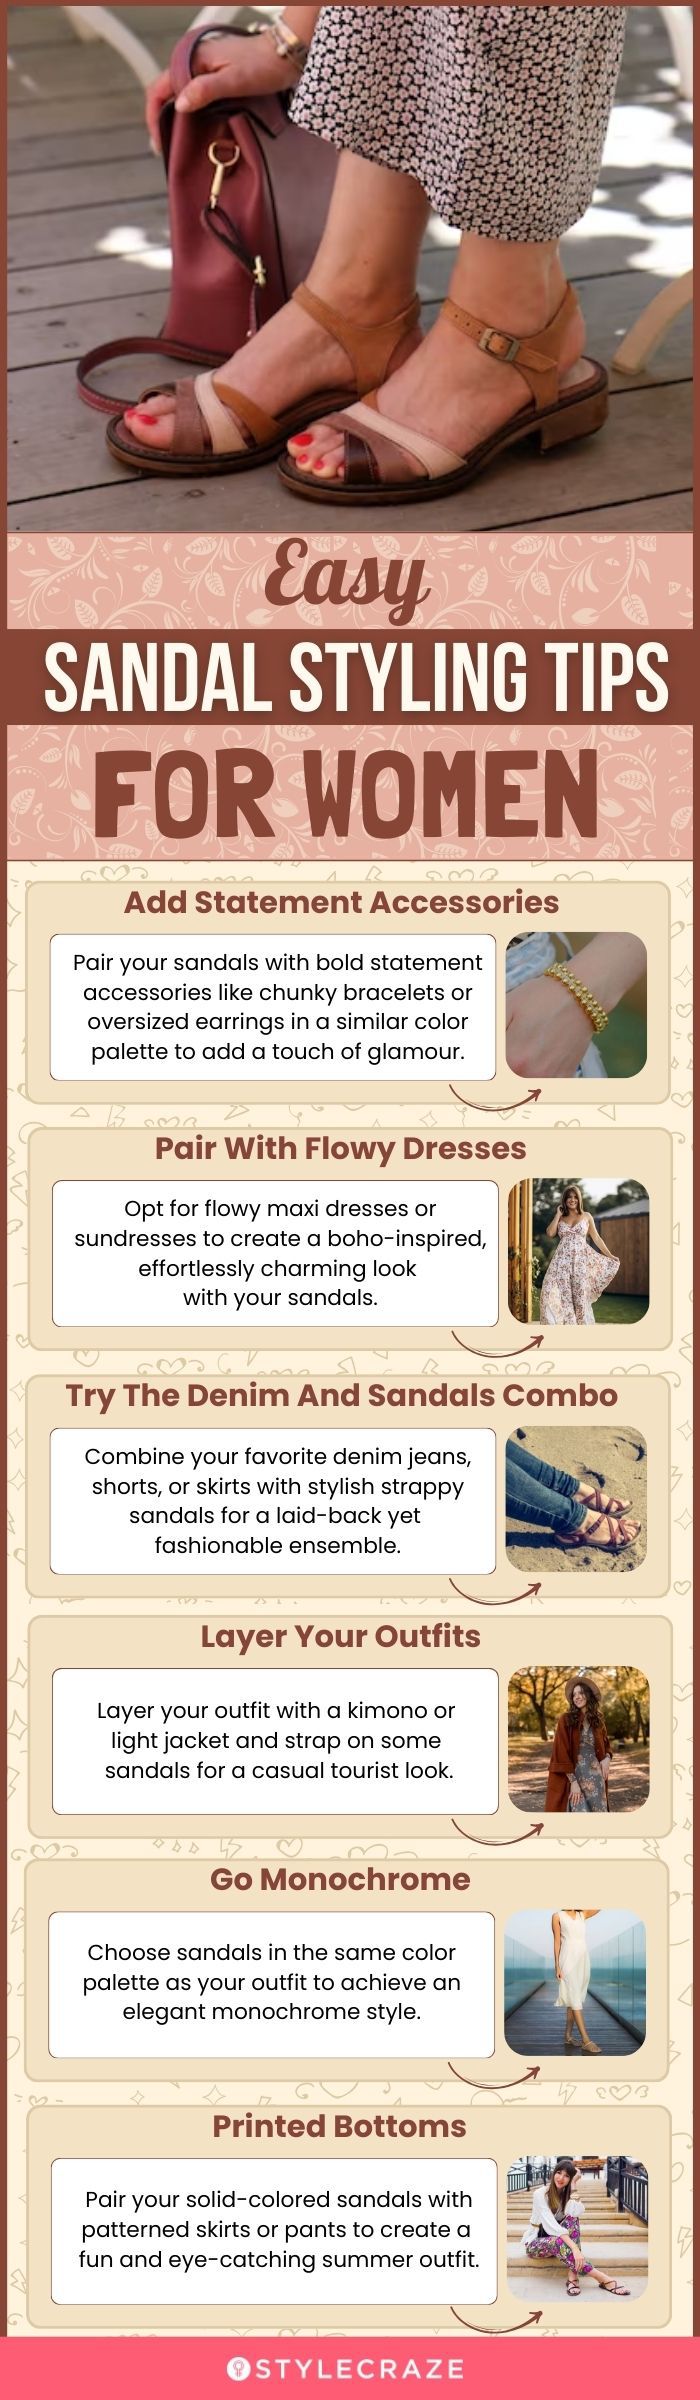 Easy Sandal Styling Tips For Women (infographic)